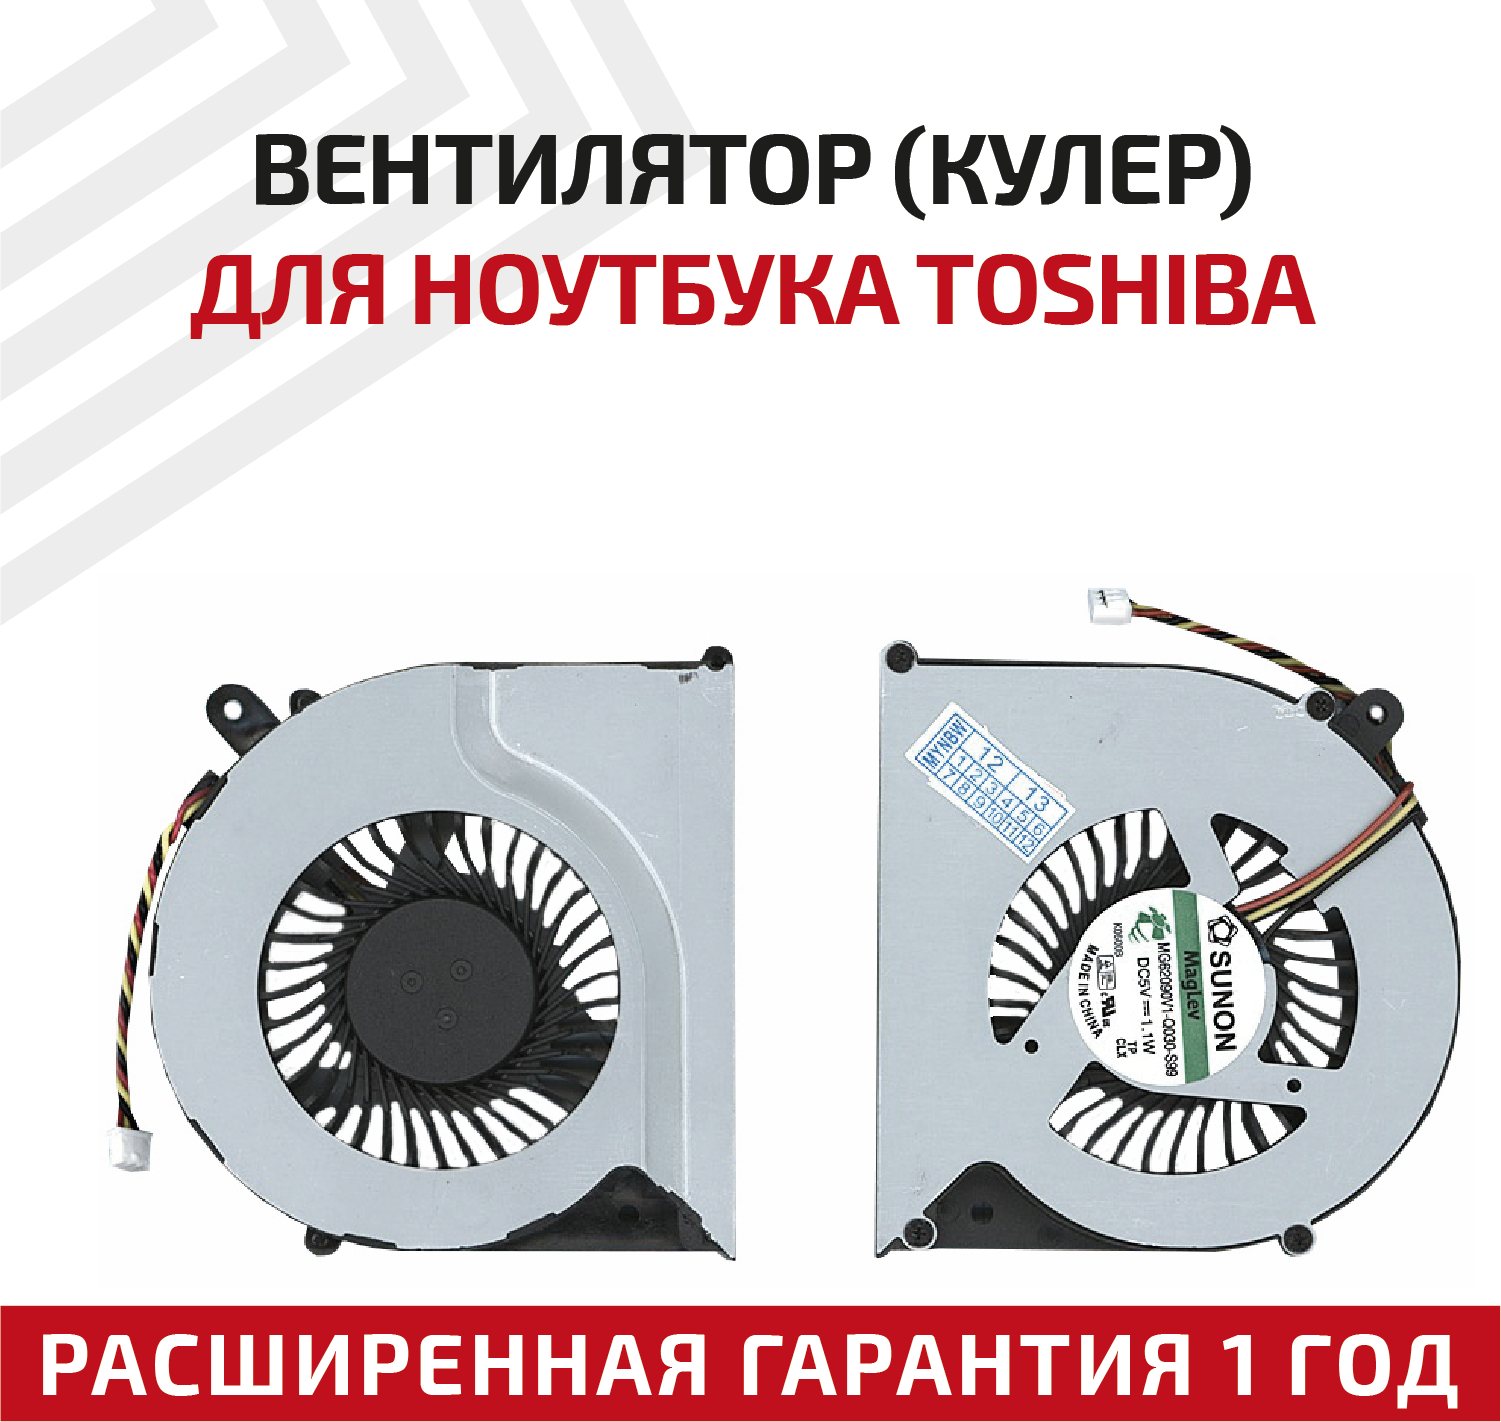 Вентилятор (кулер) для ноутбука Toshiba Satellite C850, C855, C875, C870, L850, L870, ver.1, 3-pin